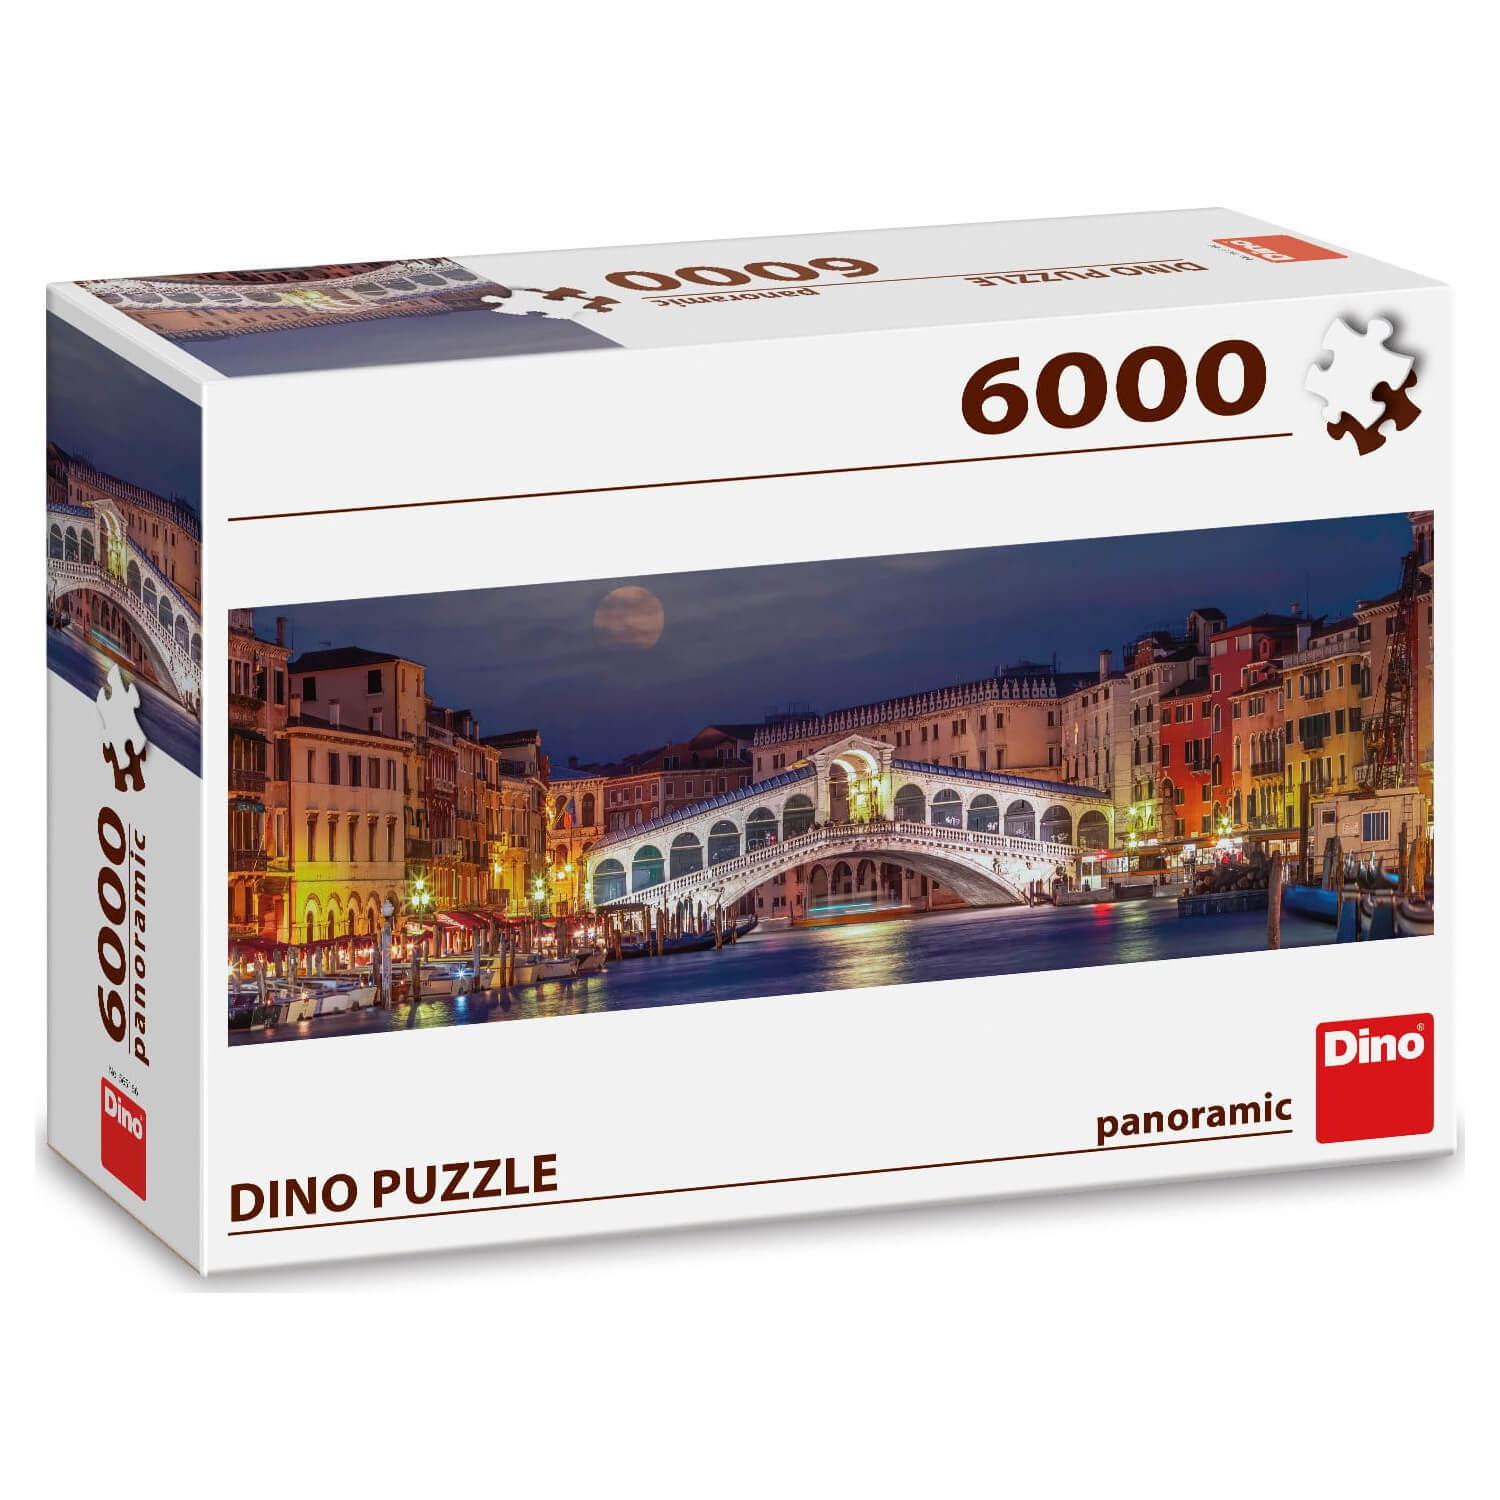 Puzzle de 3000 pièces Educa Panorama Venecia - Jouets